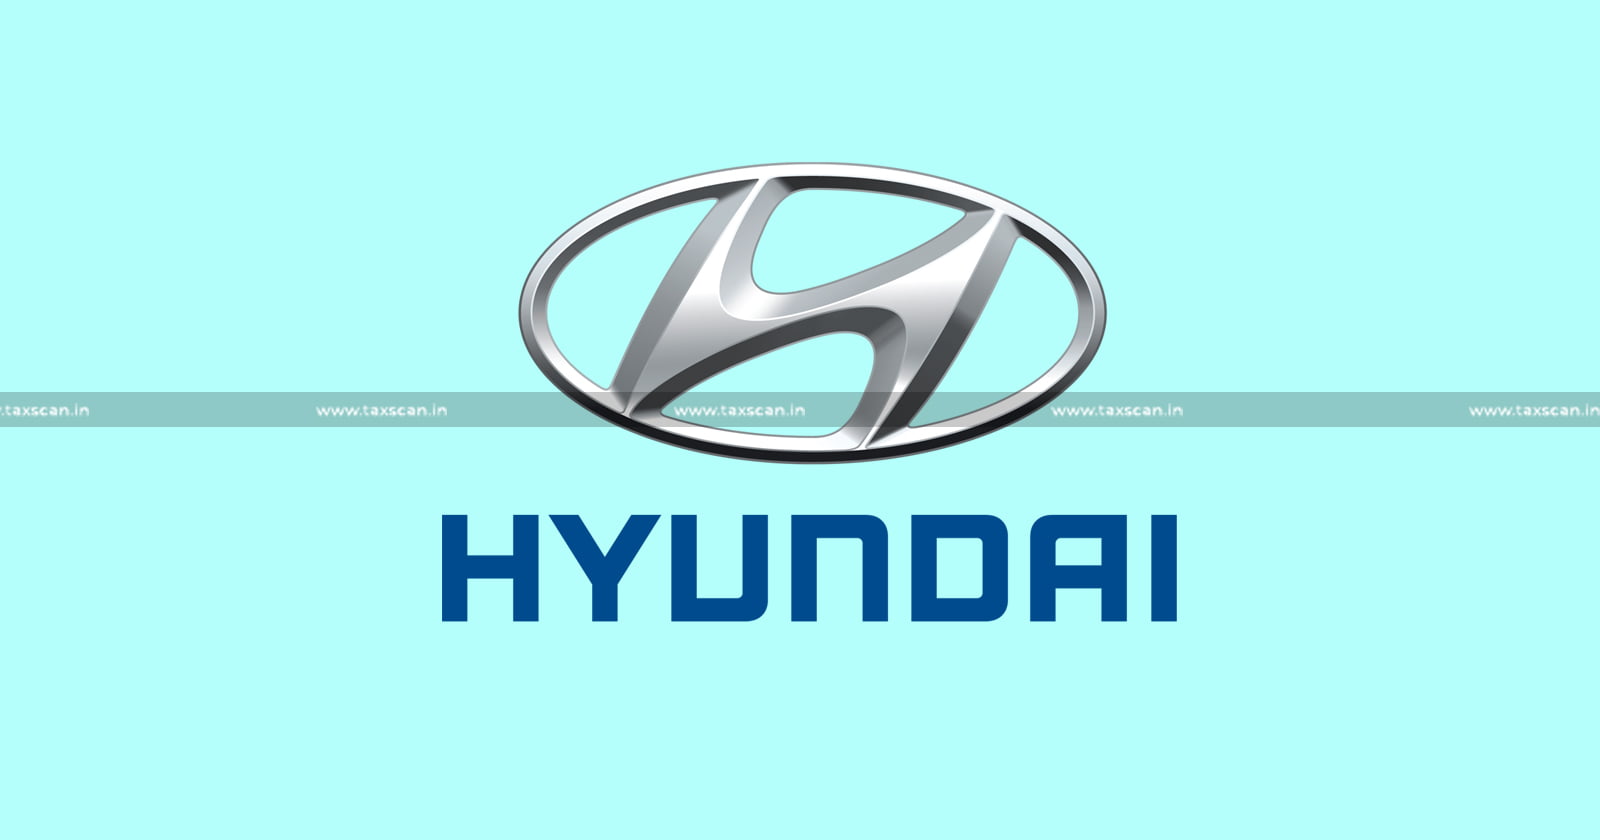 DCM Hyundai - CESTAT - Tipper Bodies - EOU - DTA - Concessional Rate of Duty - taxscan